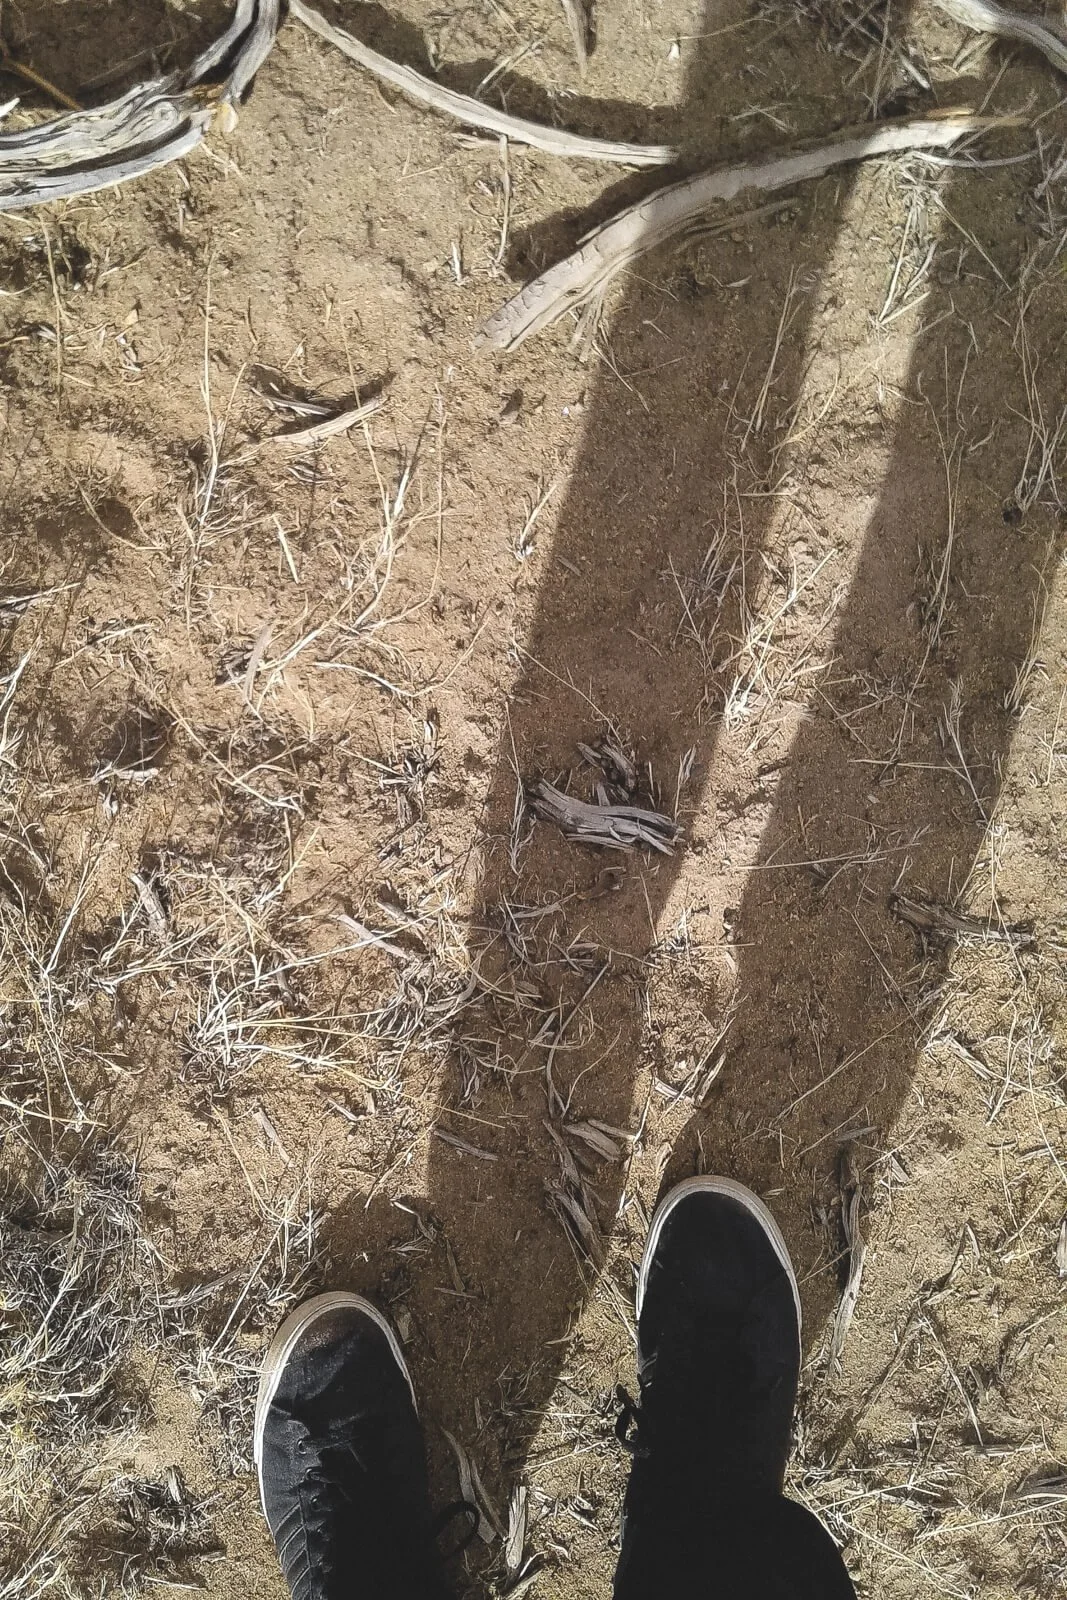 Eli's feet and shadow above the desert dirt.